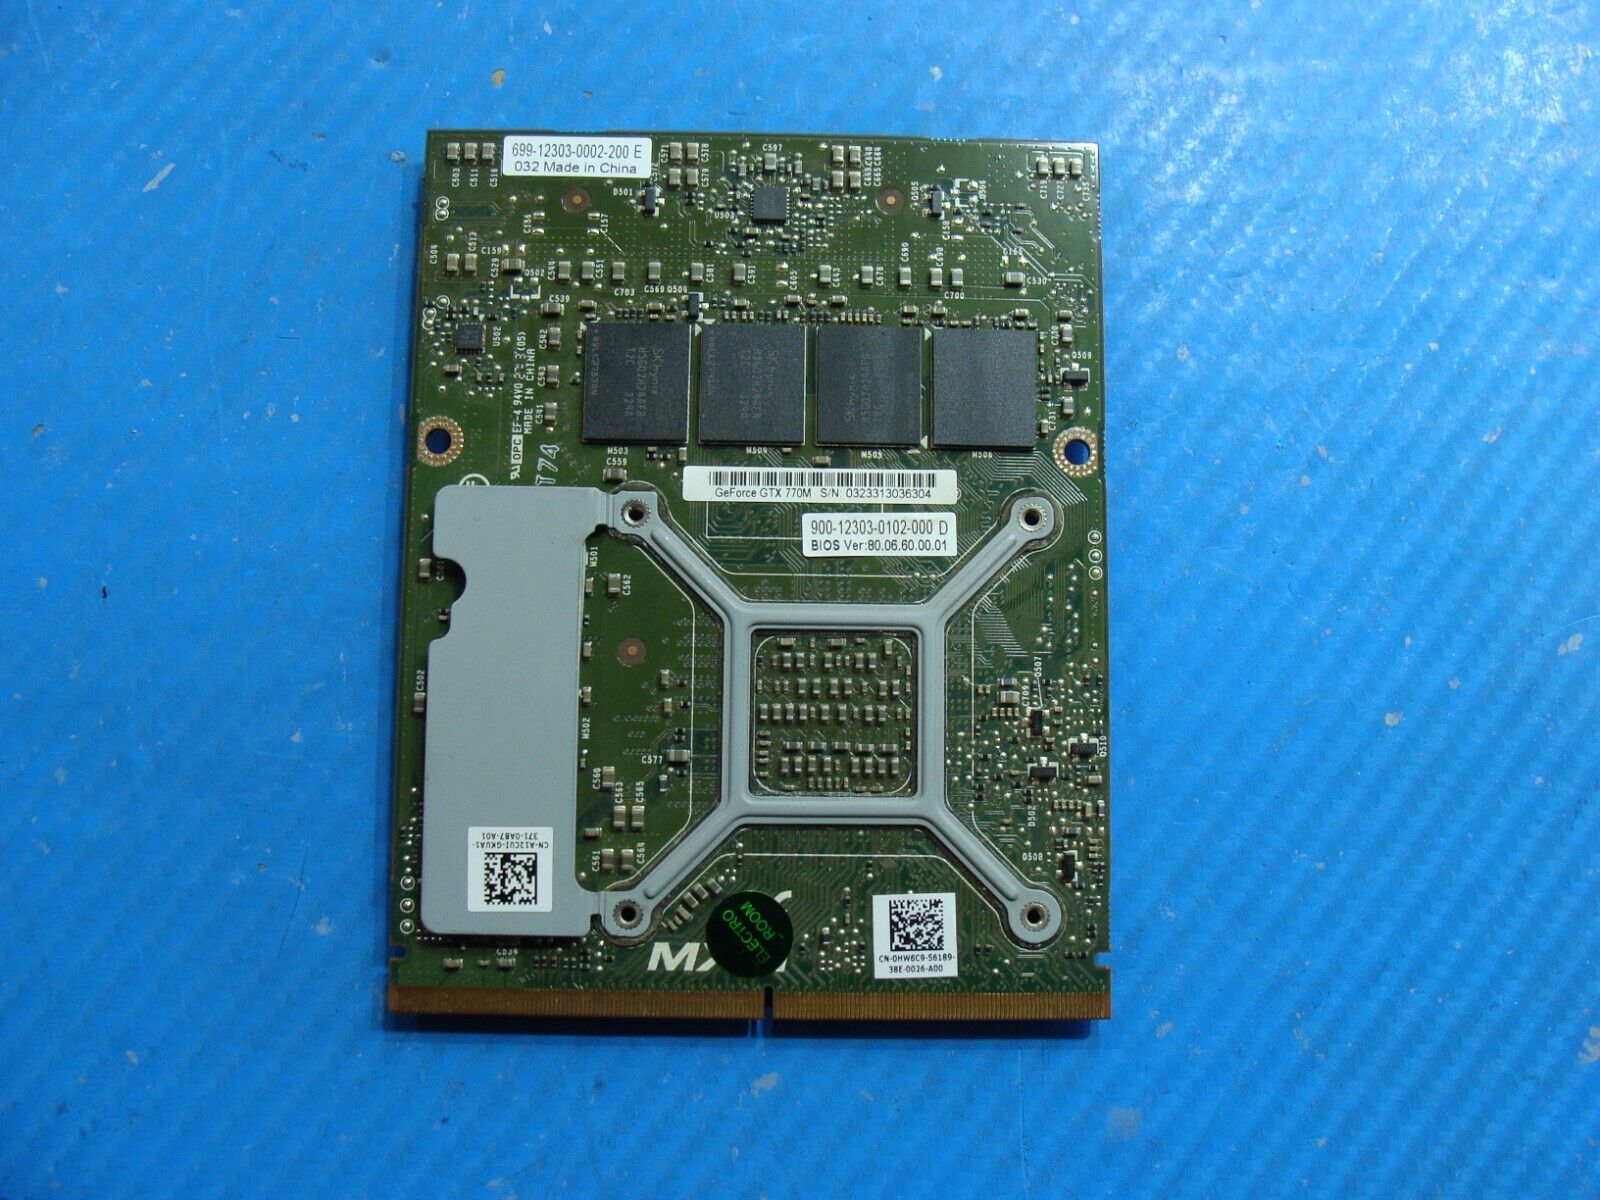 Dell Alienware 17 NVIDIA Geforce GTX 770M 3GB Video Card HW6C9